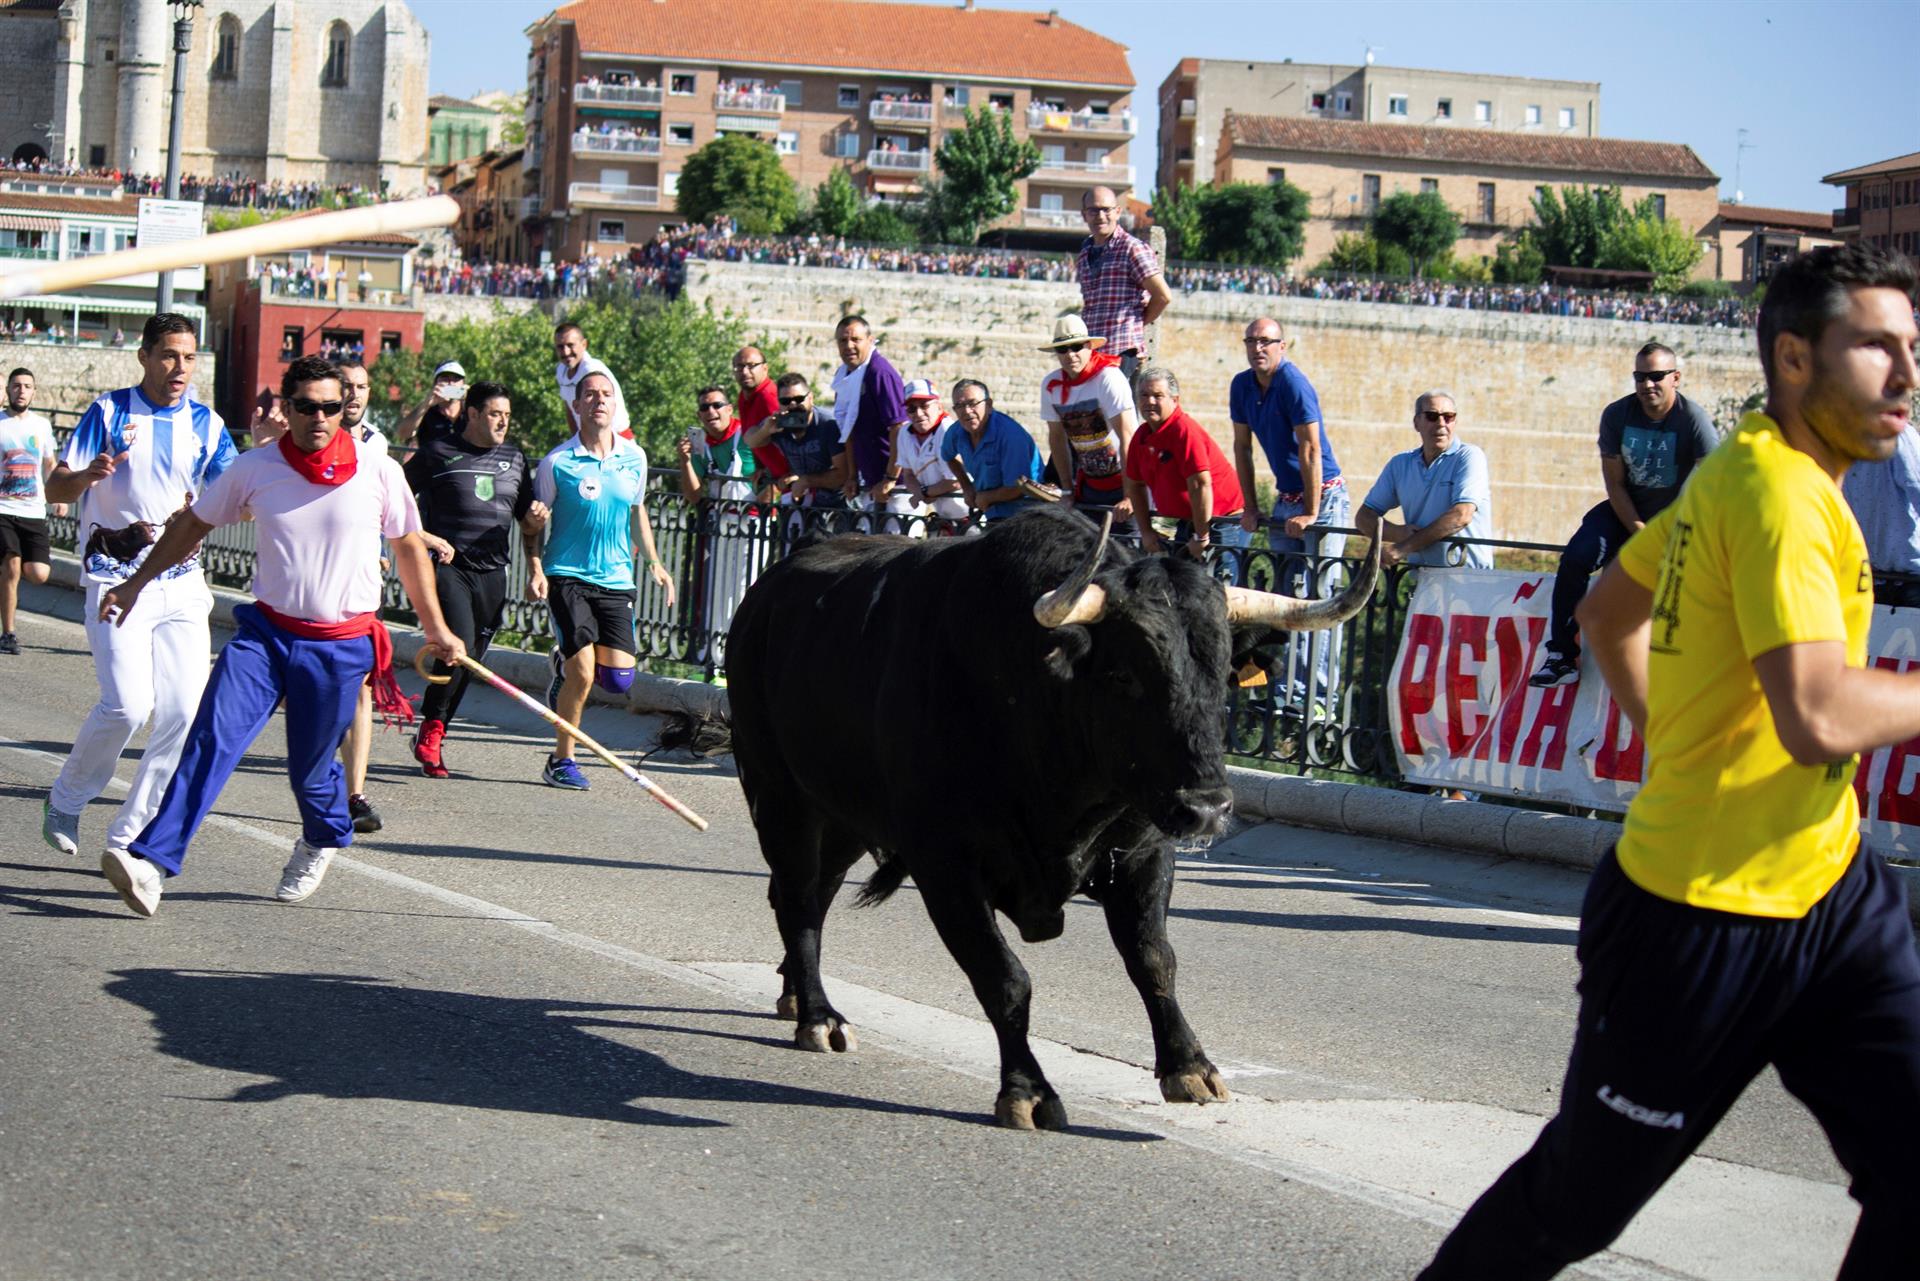 Imagen de 2018 de la localidad vallisoletana de Tordesillas celebrando el tradicional festejo del Toro de la Vega. EFE